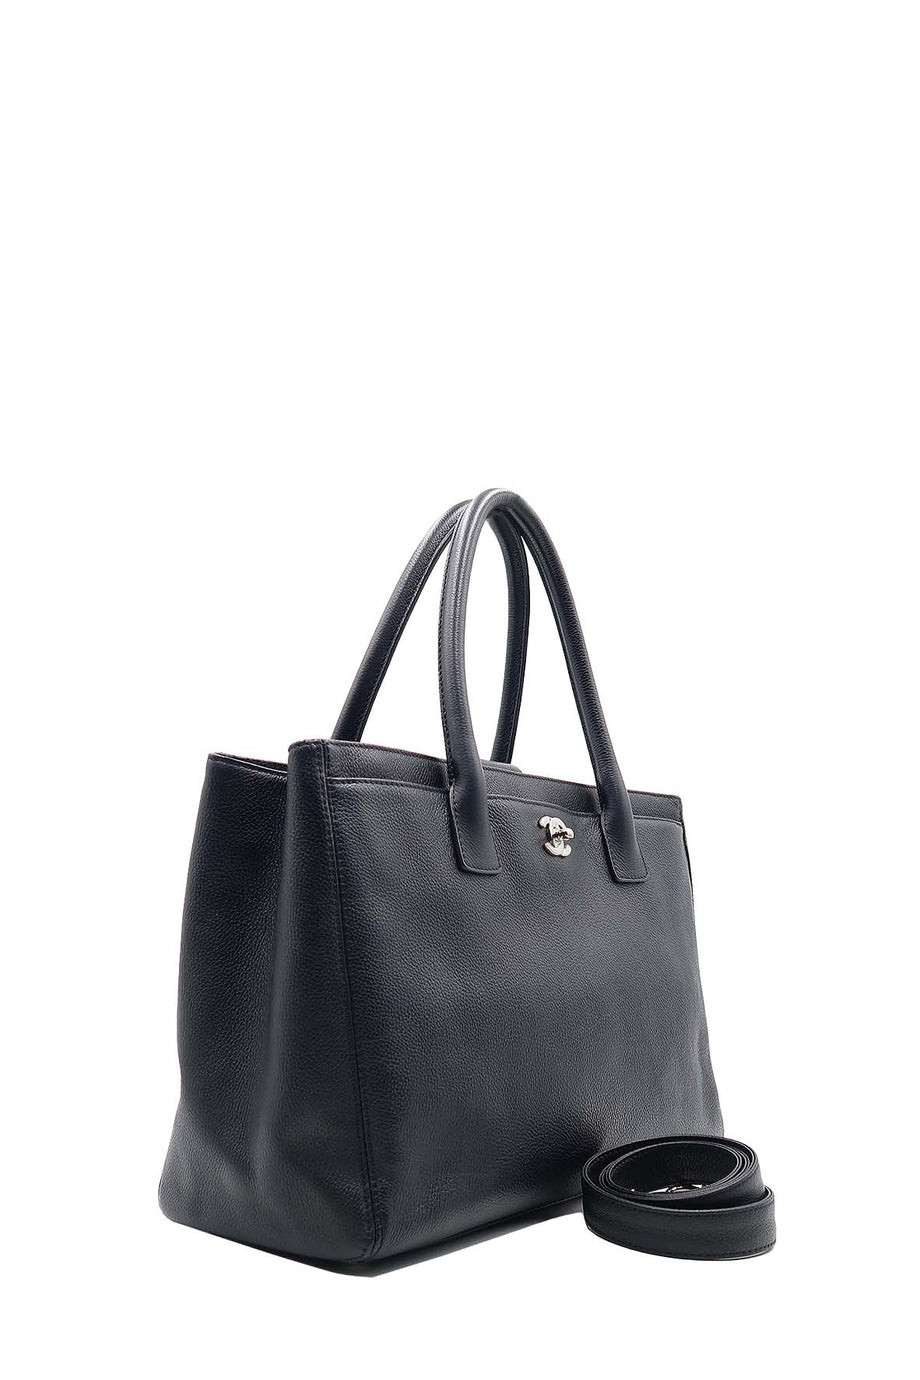 Chanel Executive Cerf Tote - Black Totes, Handbags - CHA218703